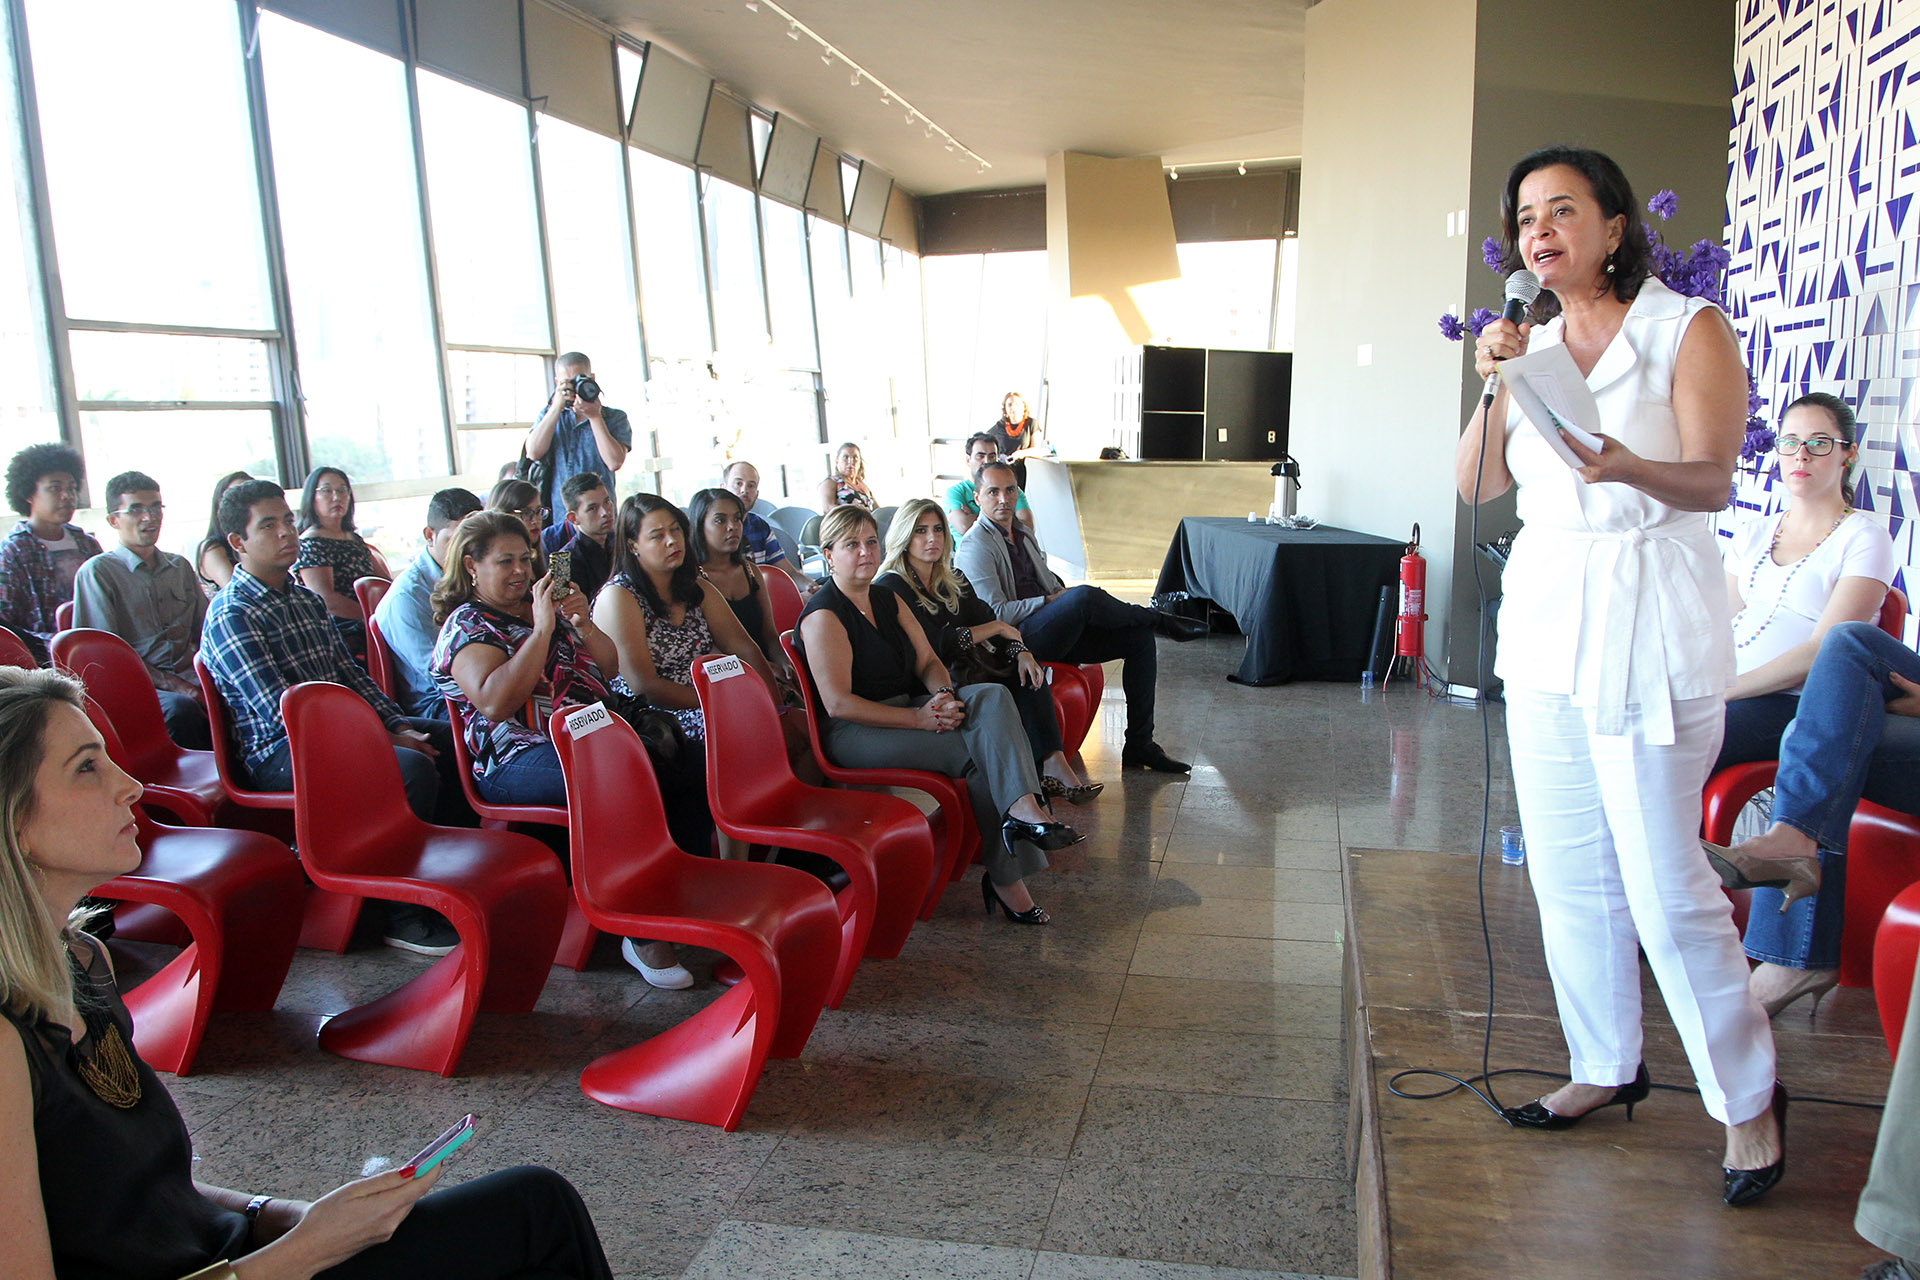 Idealizadora do programa Brasília Cidadã, Márcia Rollemberg considerou o resultado durante os Jogos Olímpicos positivo